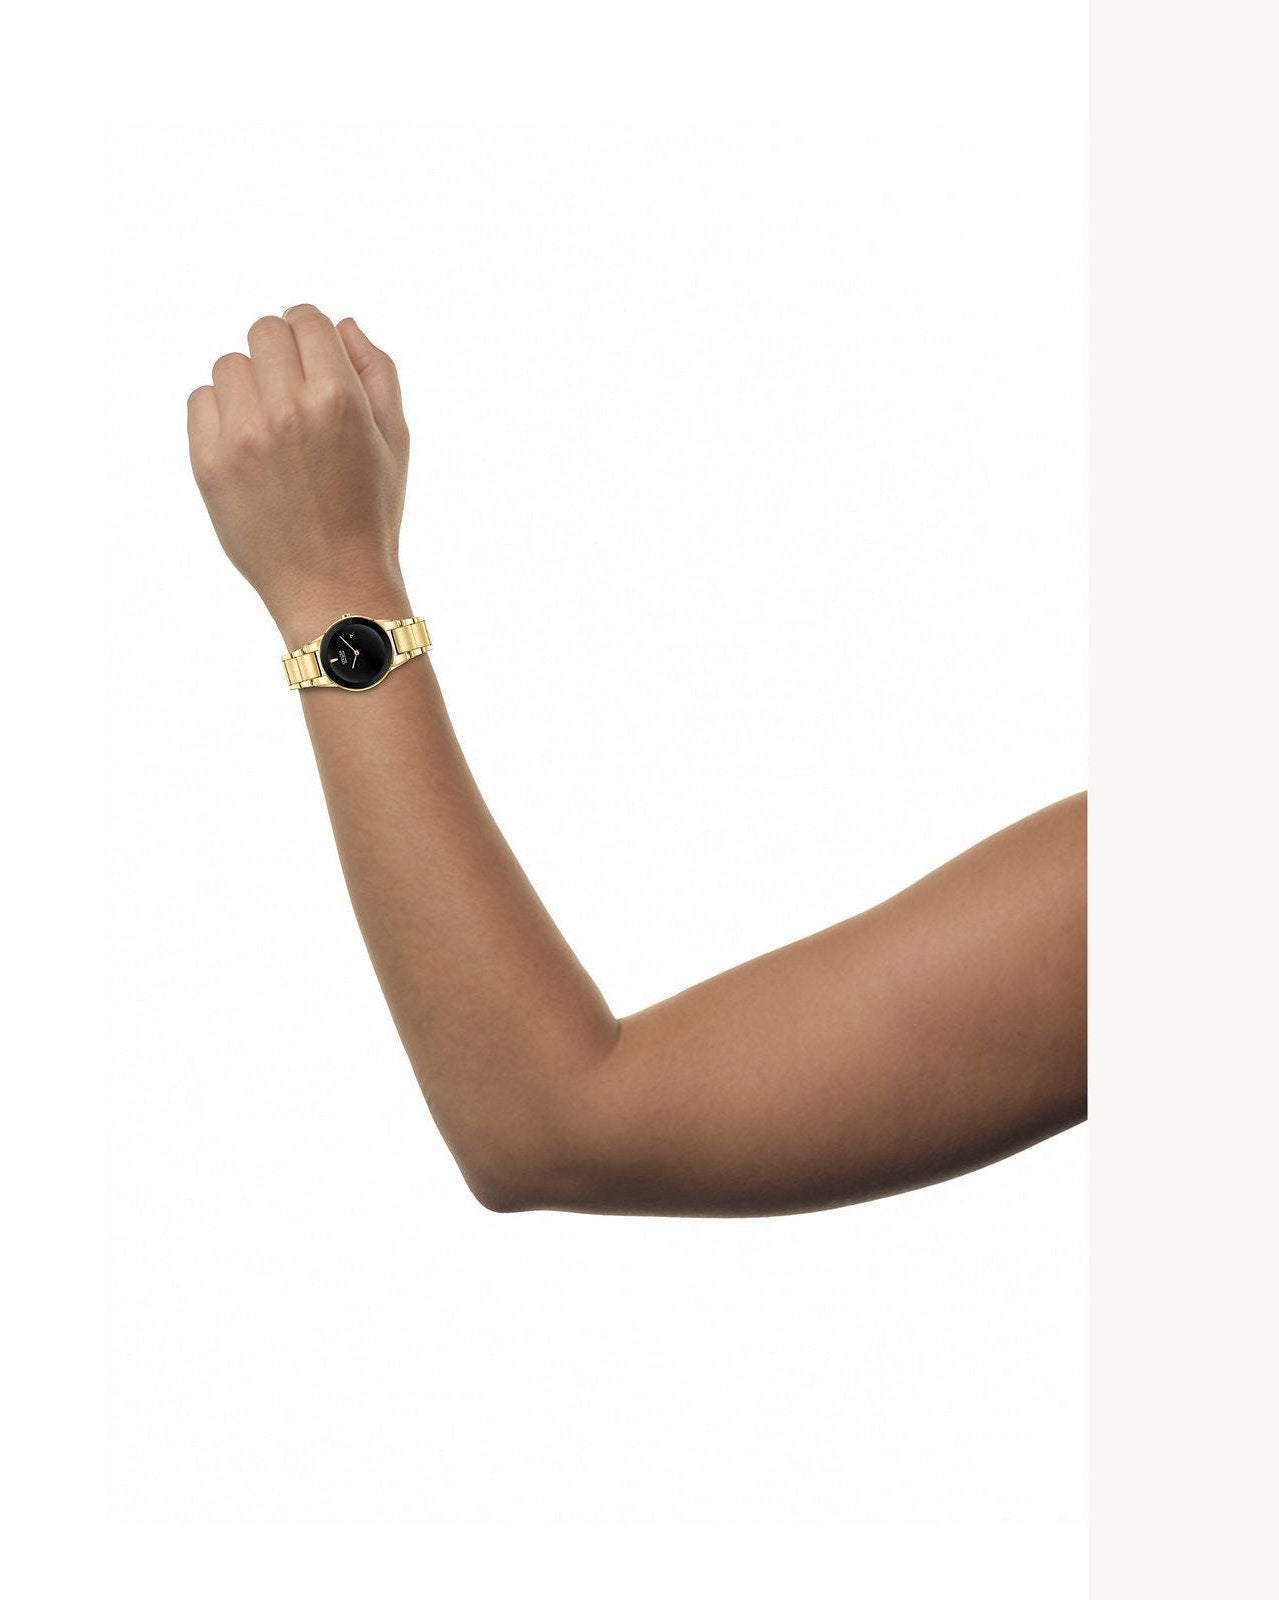 Citizen Eco-Drive Axiom Gold-tone Black dial Watch(Model GA1052-55E)